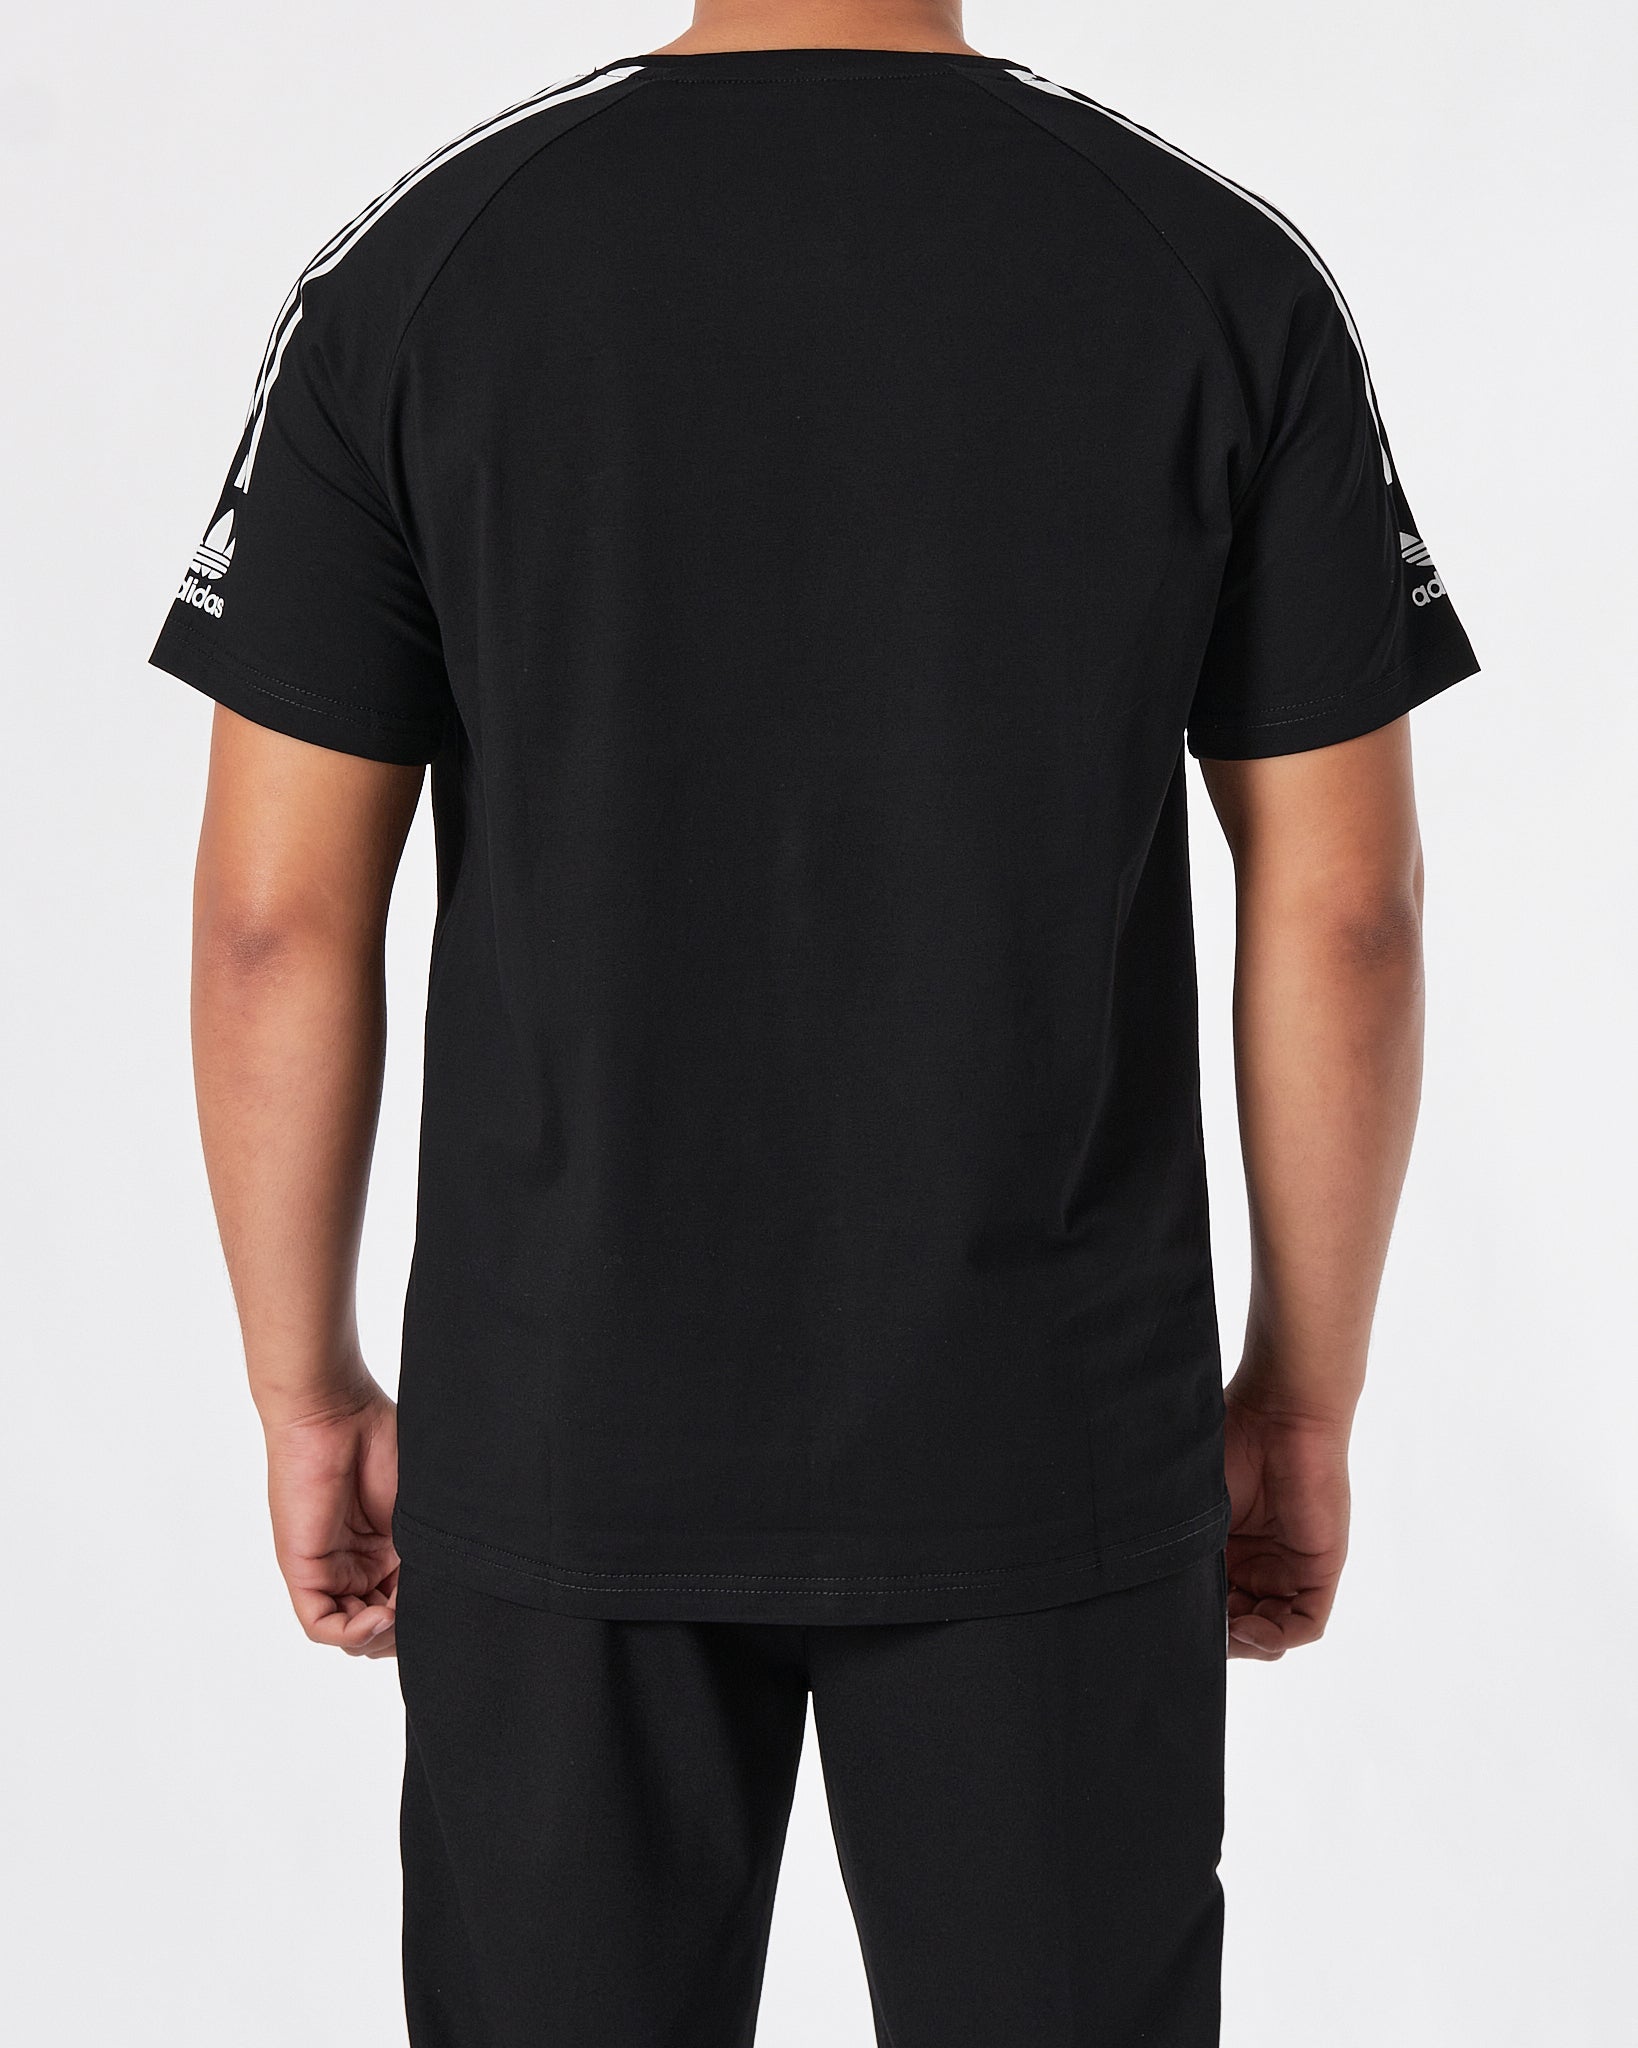 ADI Striped Sleeve Men Black T-Shirt 13.90